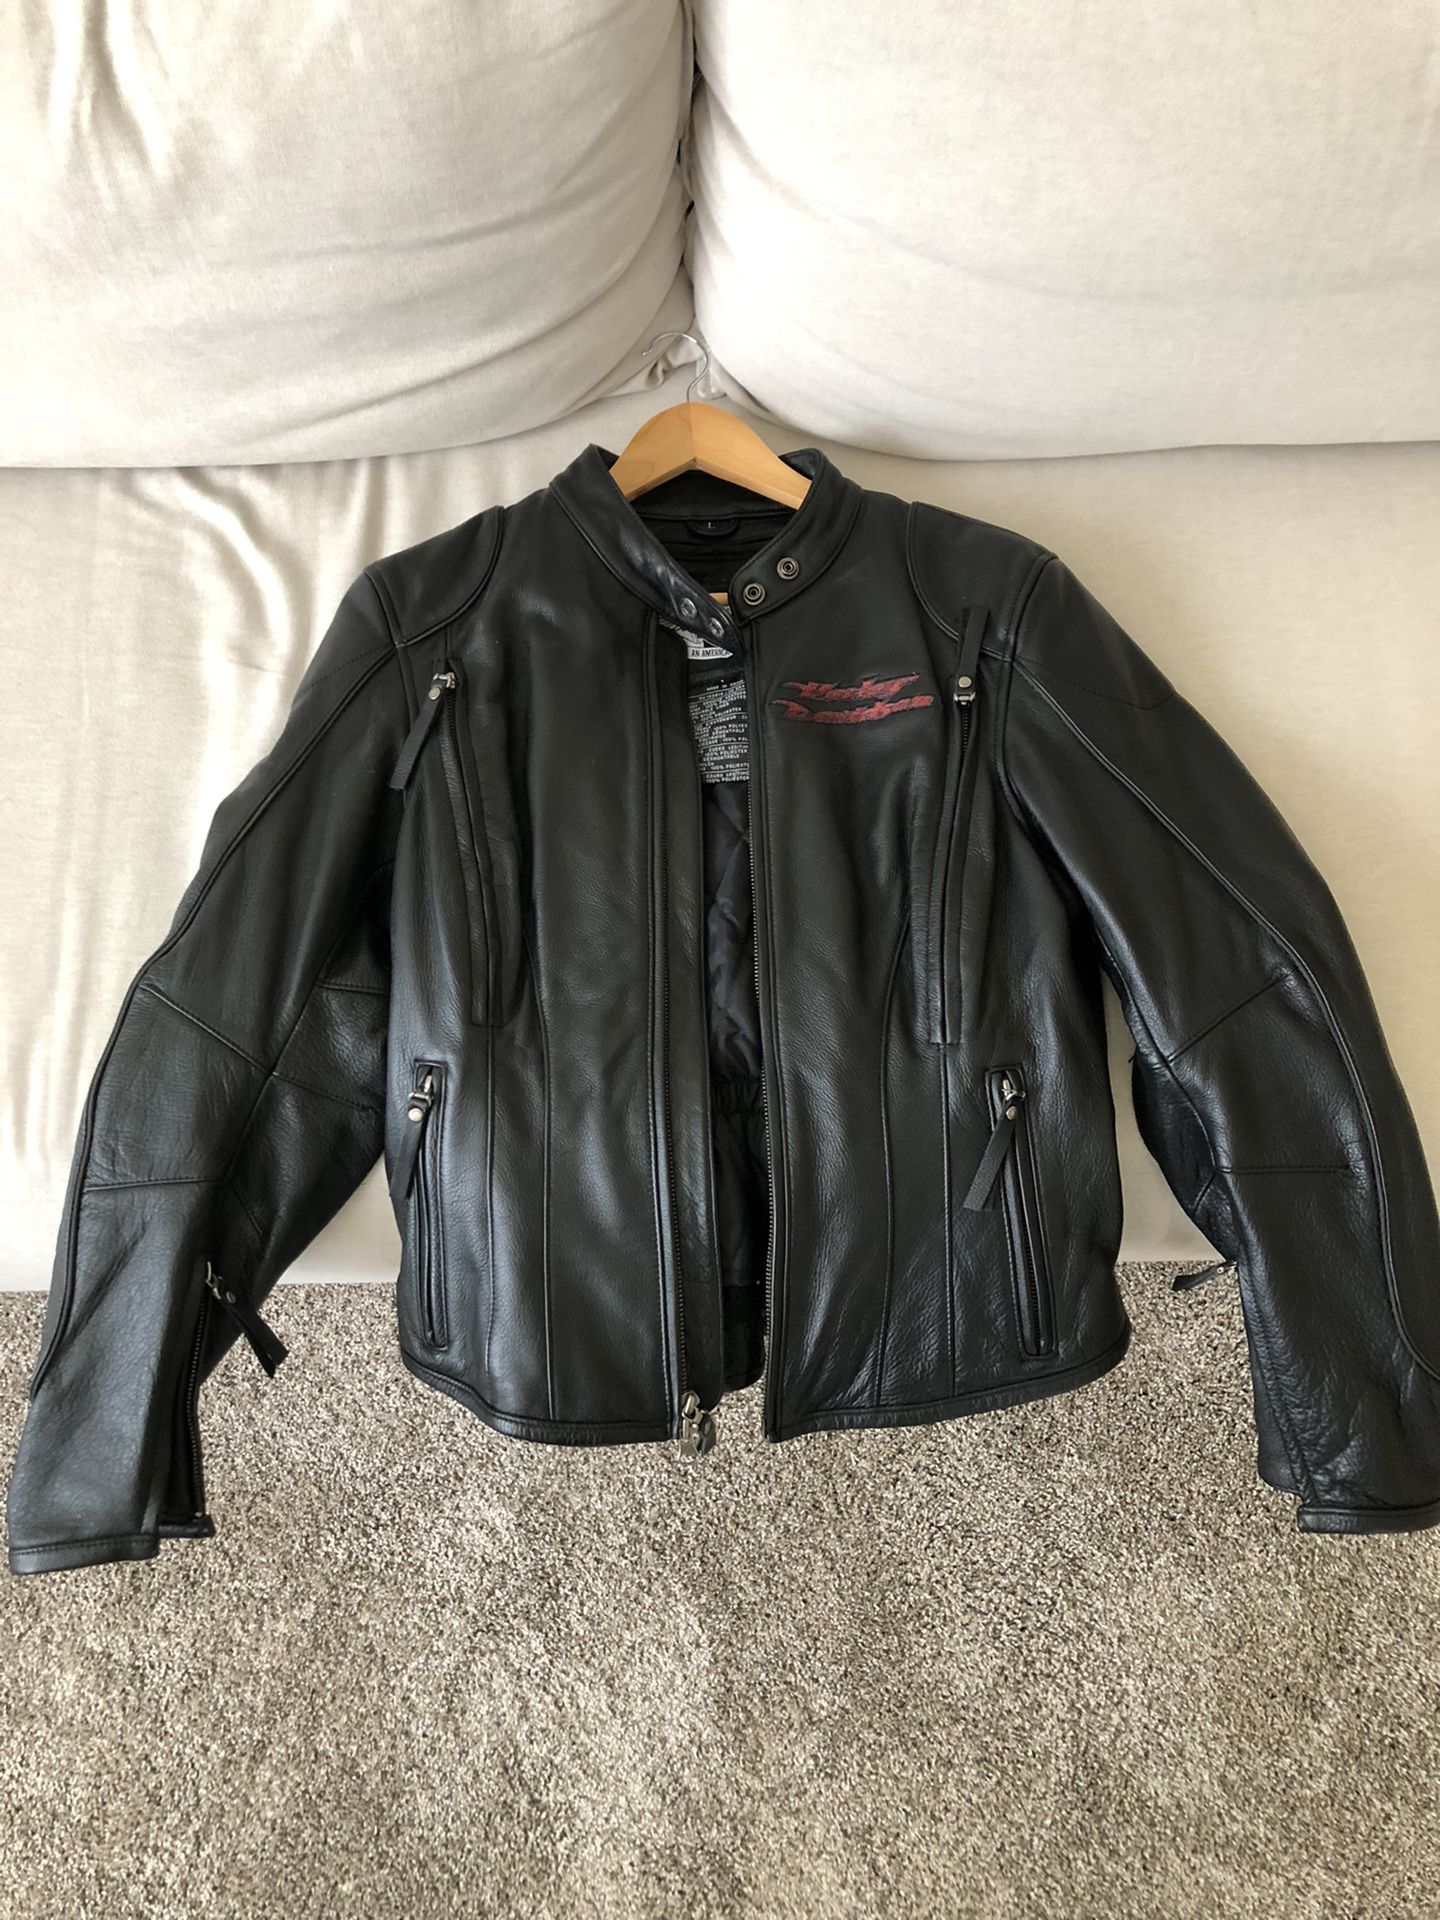 Women’s Harley Davidson Leather Riding Jacket